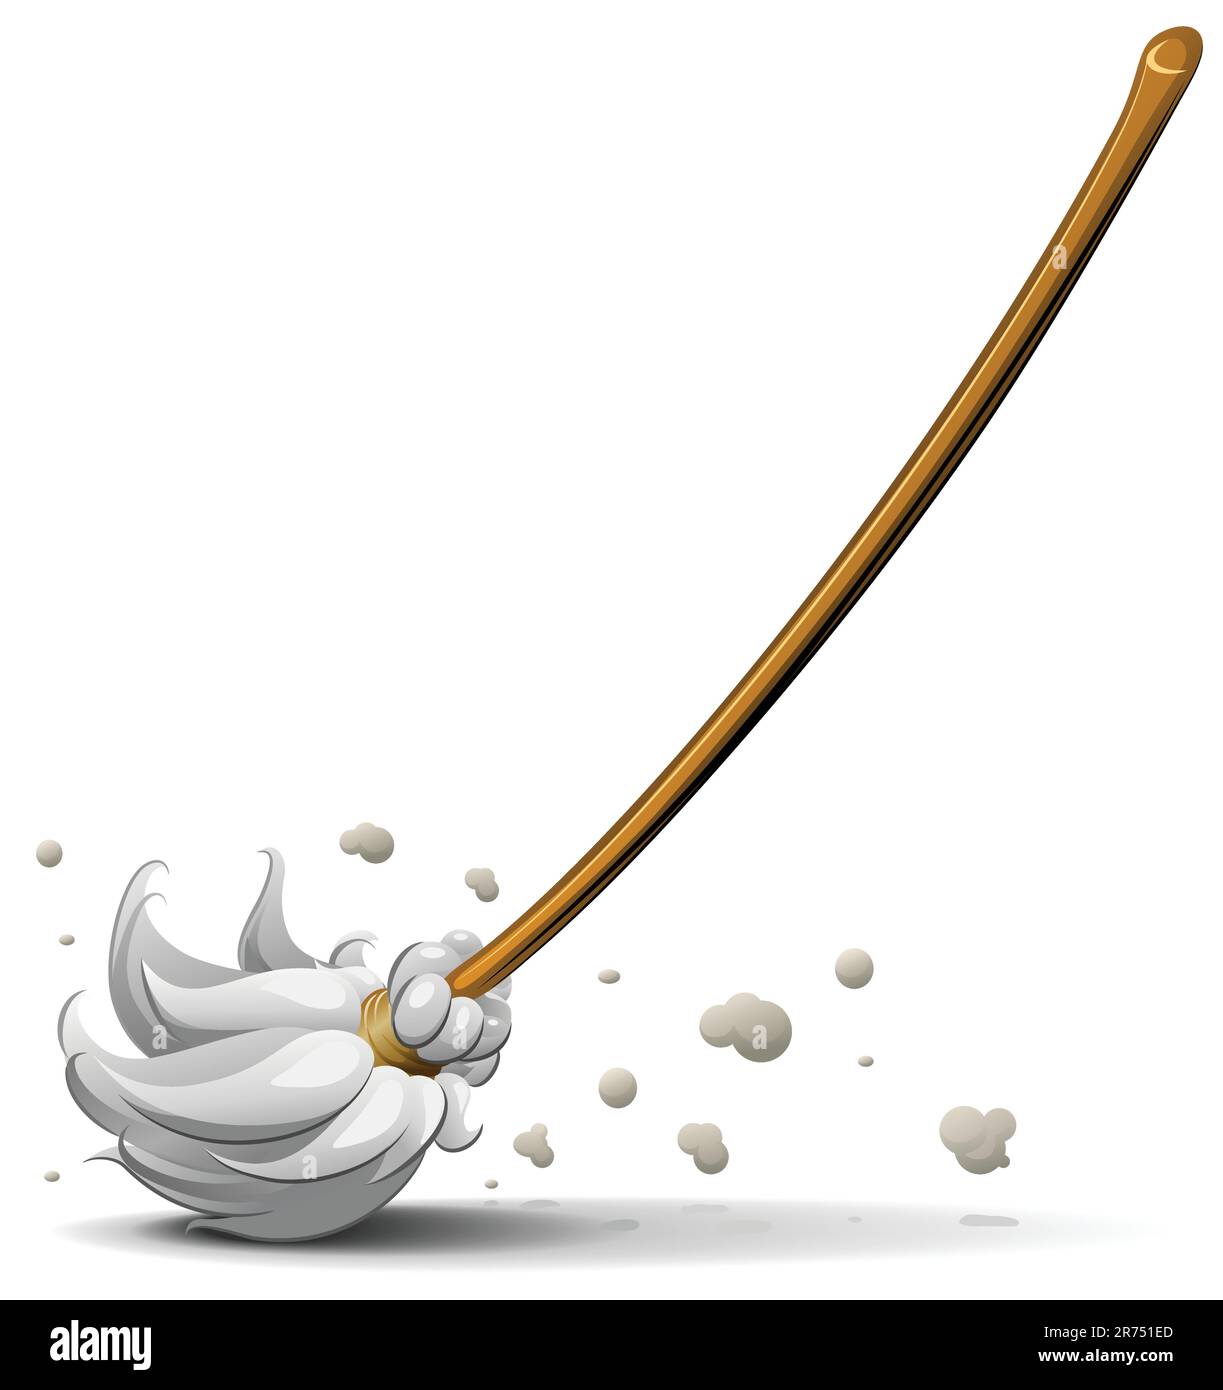 broom sweep floor vector illustration Stock Vector